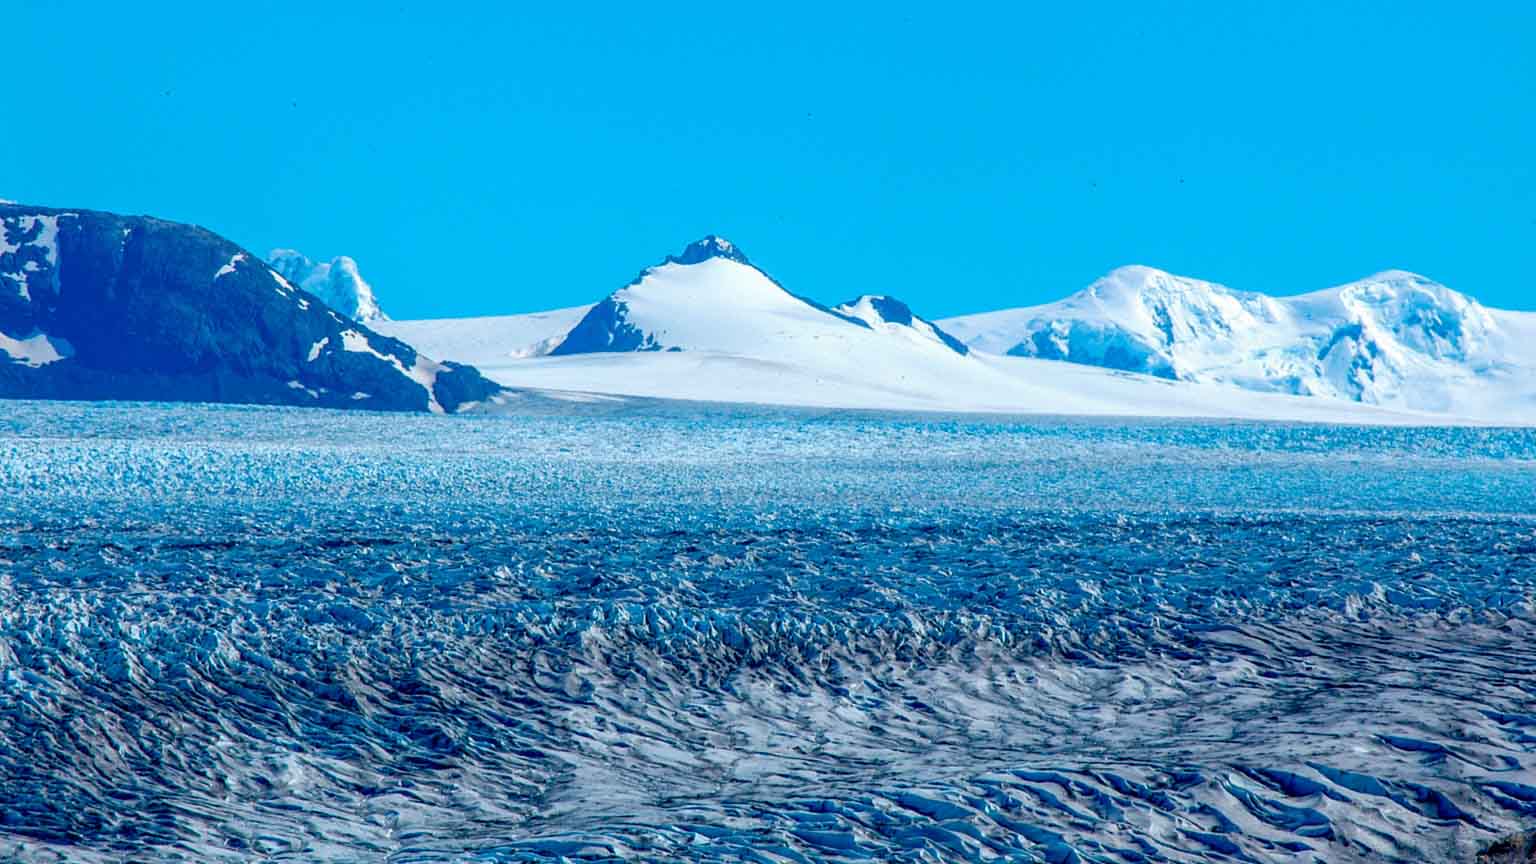 Glaciar Upsala, Argentina